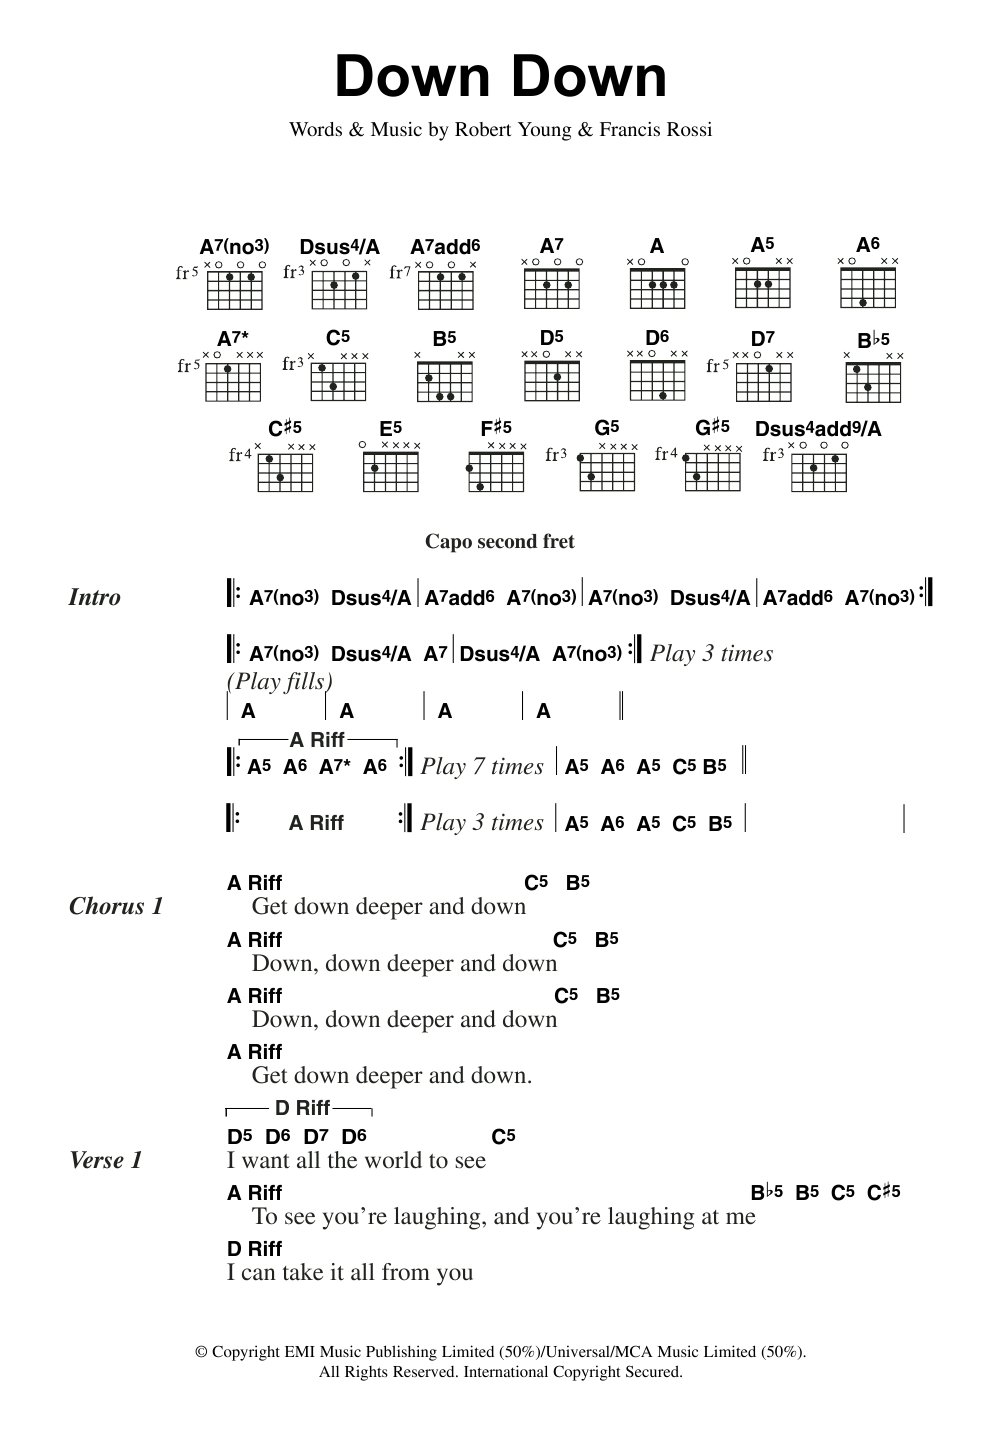 Status Quo Down Down Sheet Music Notes & Chords for Guitar Chords/Lyrics - Download or Print PDF